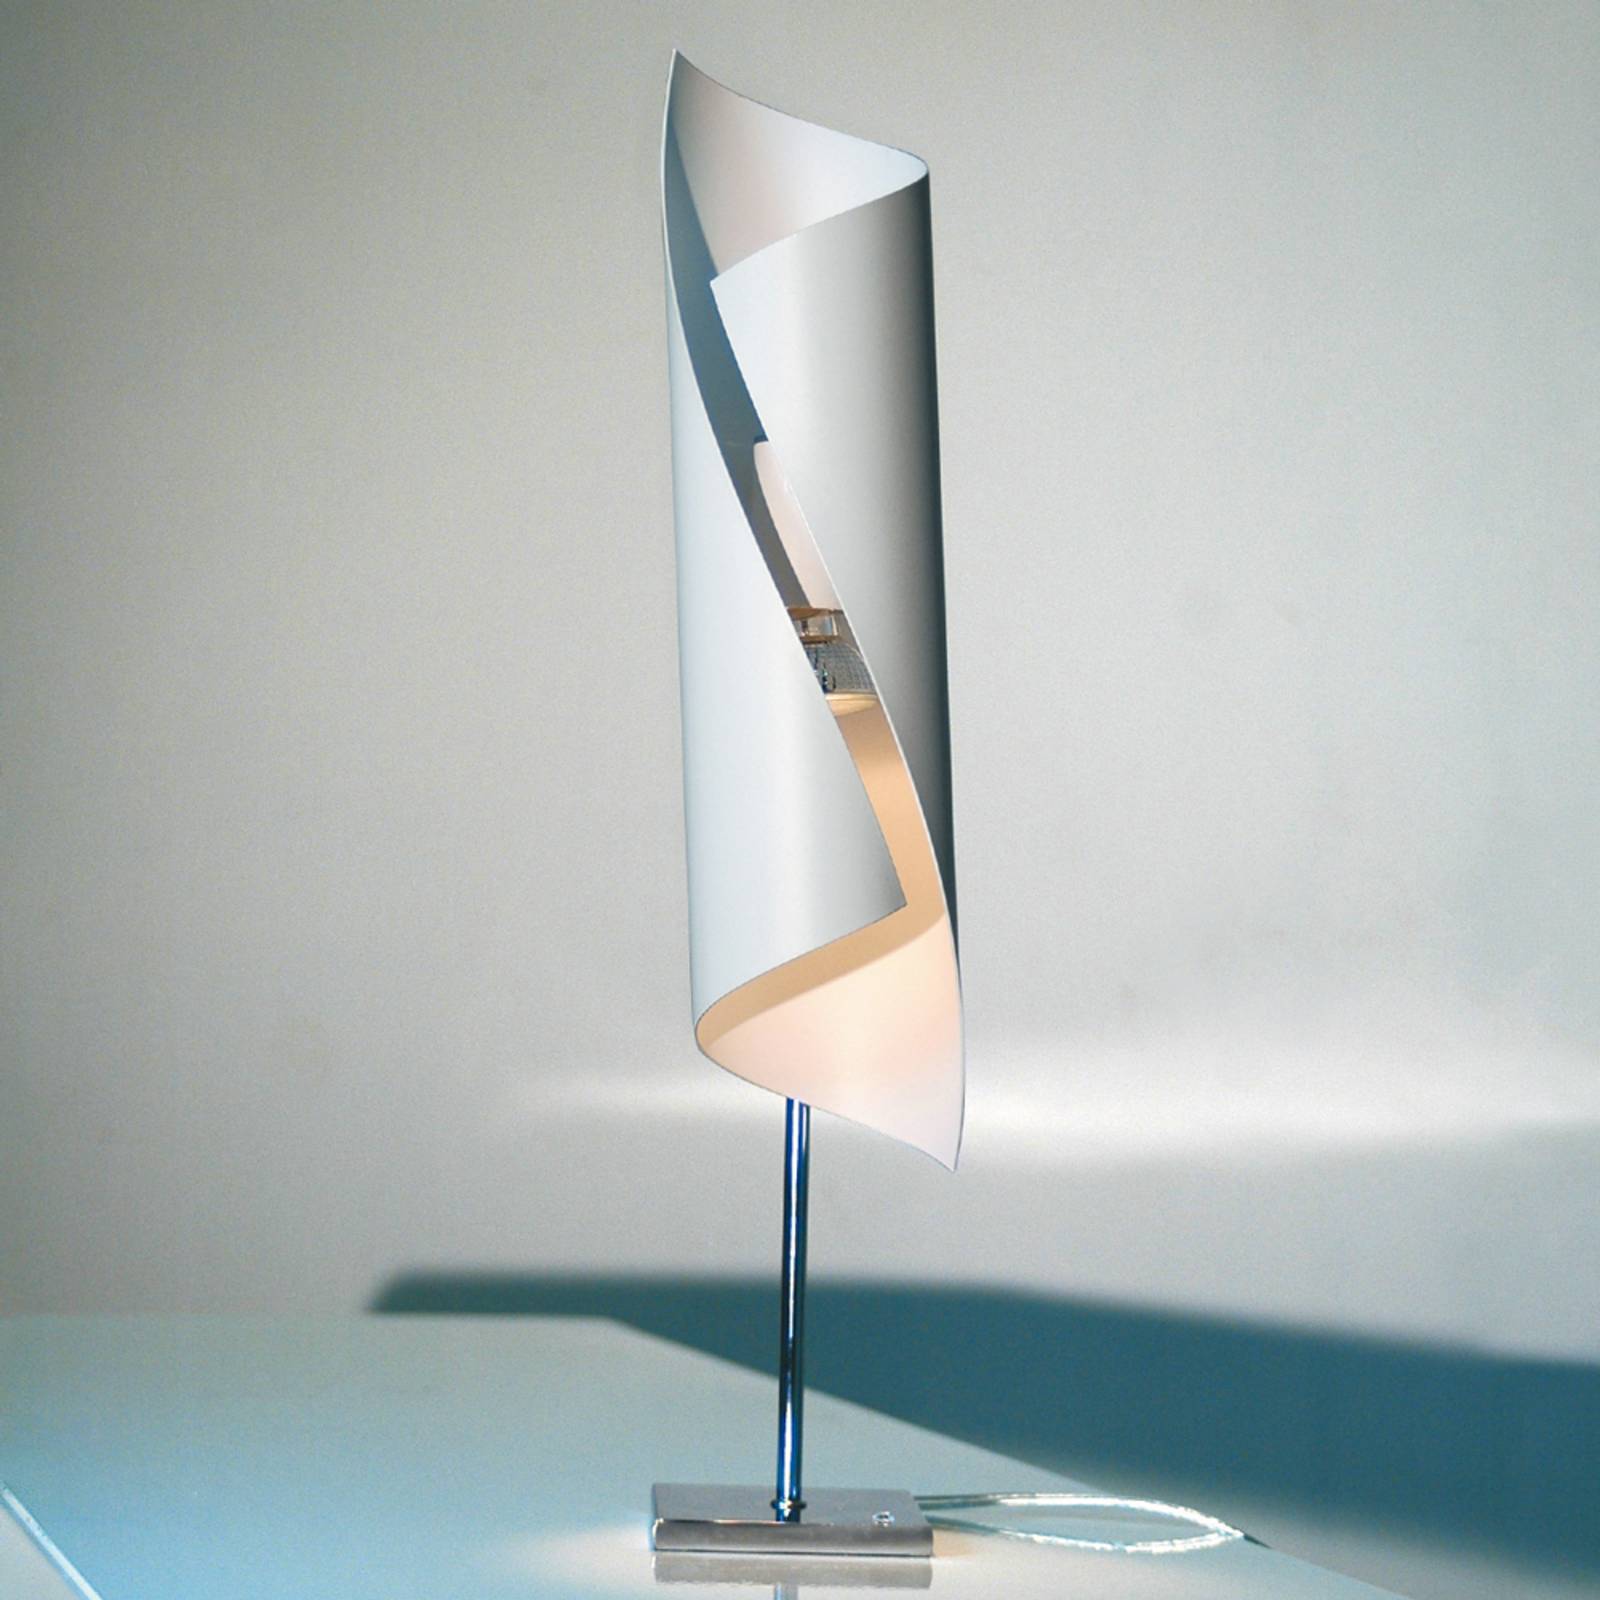 Knikerboker hué - designer asztali lámpa, 50 cm magas